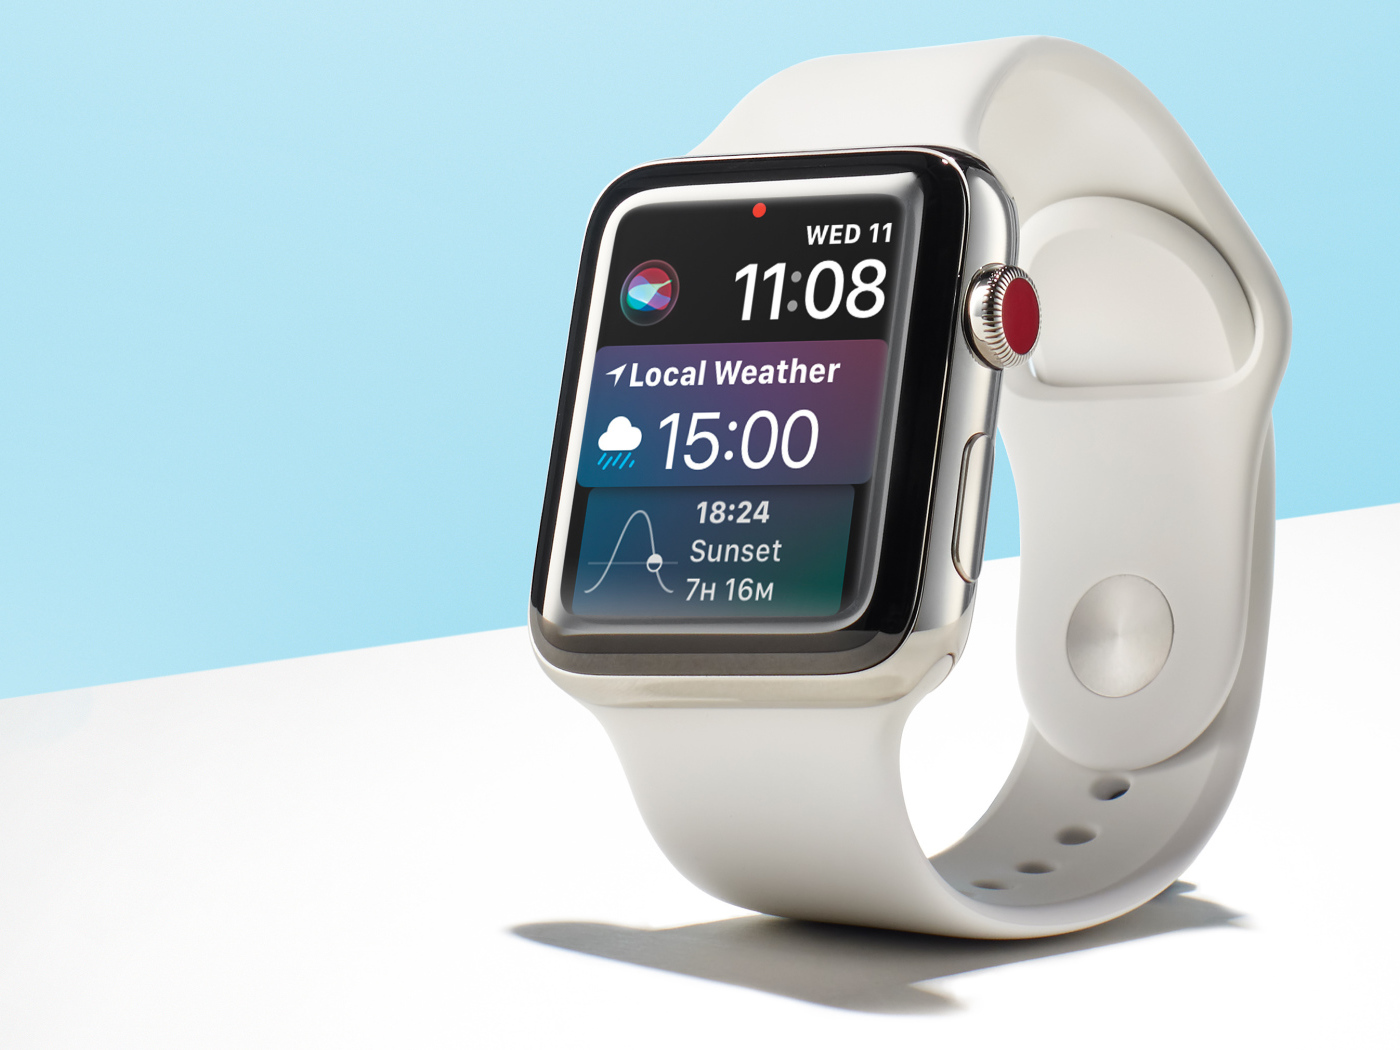 Smart Watch Apple Watch Series 4 on a blue background